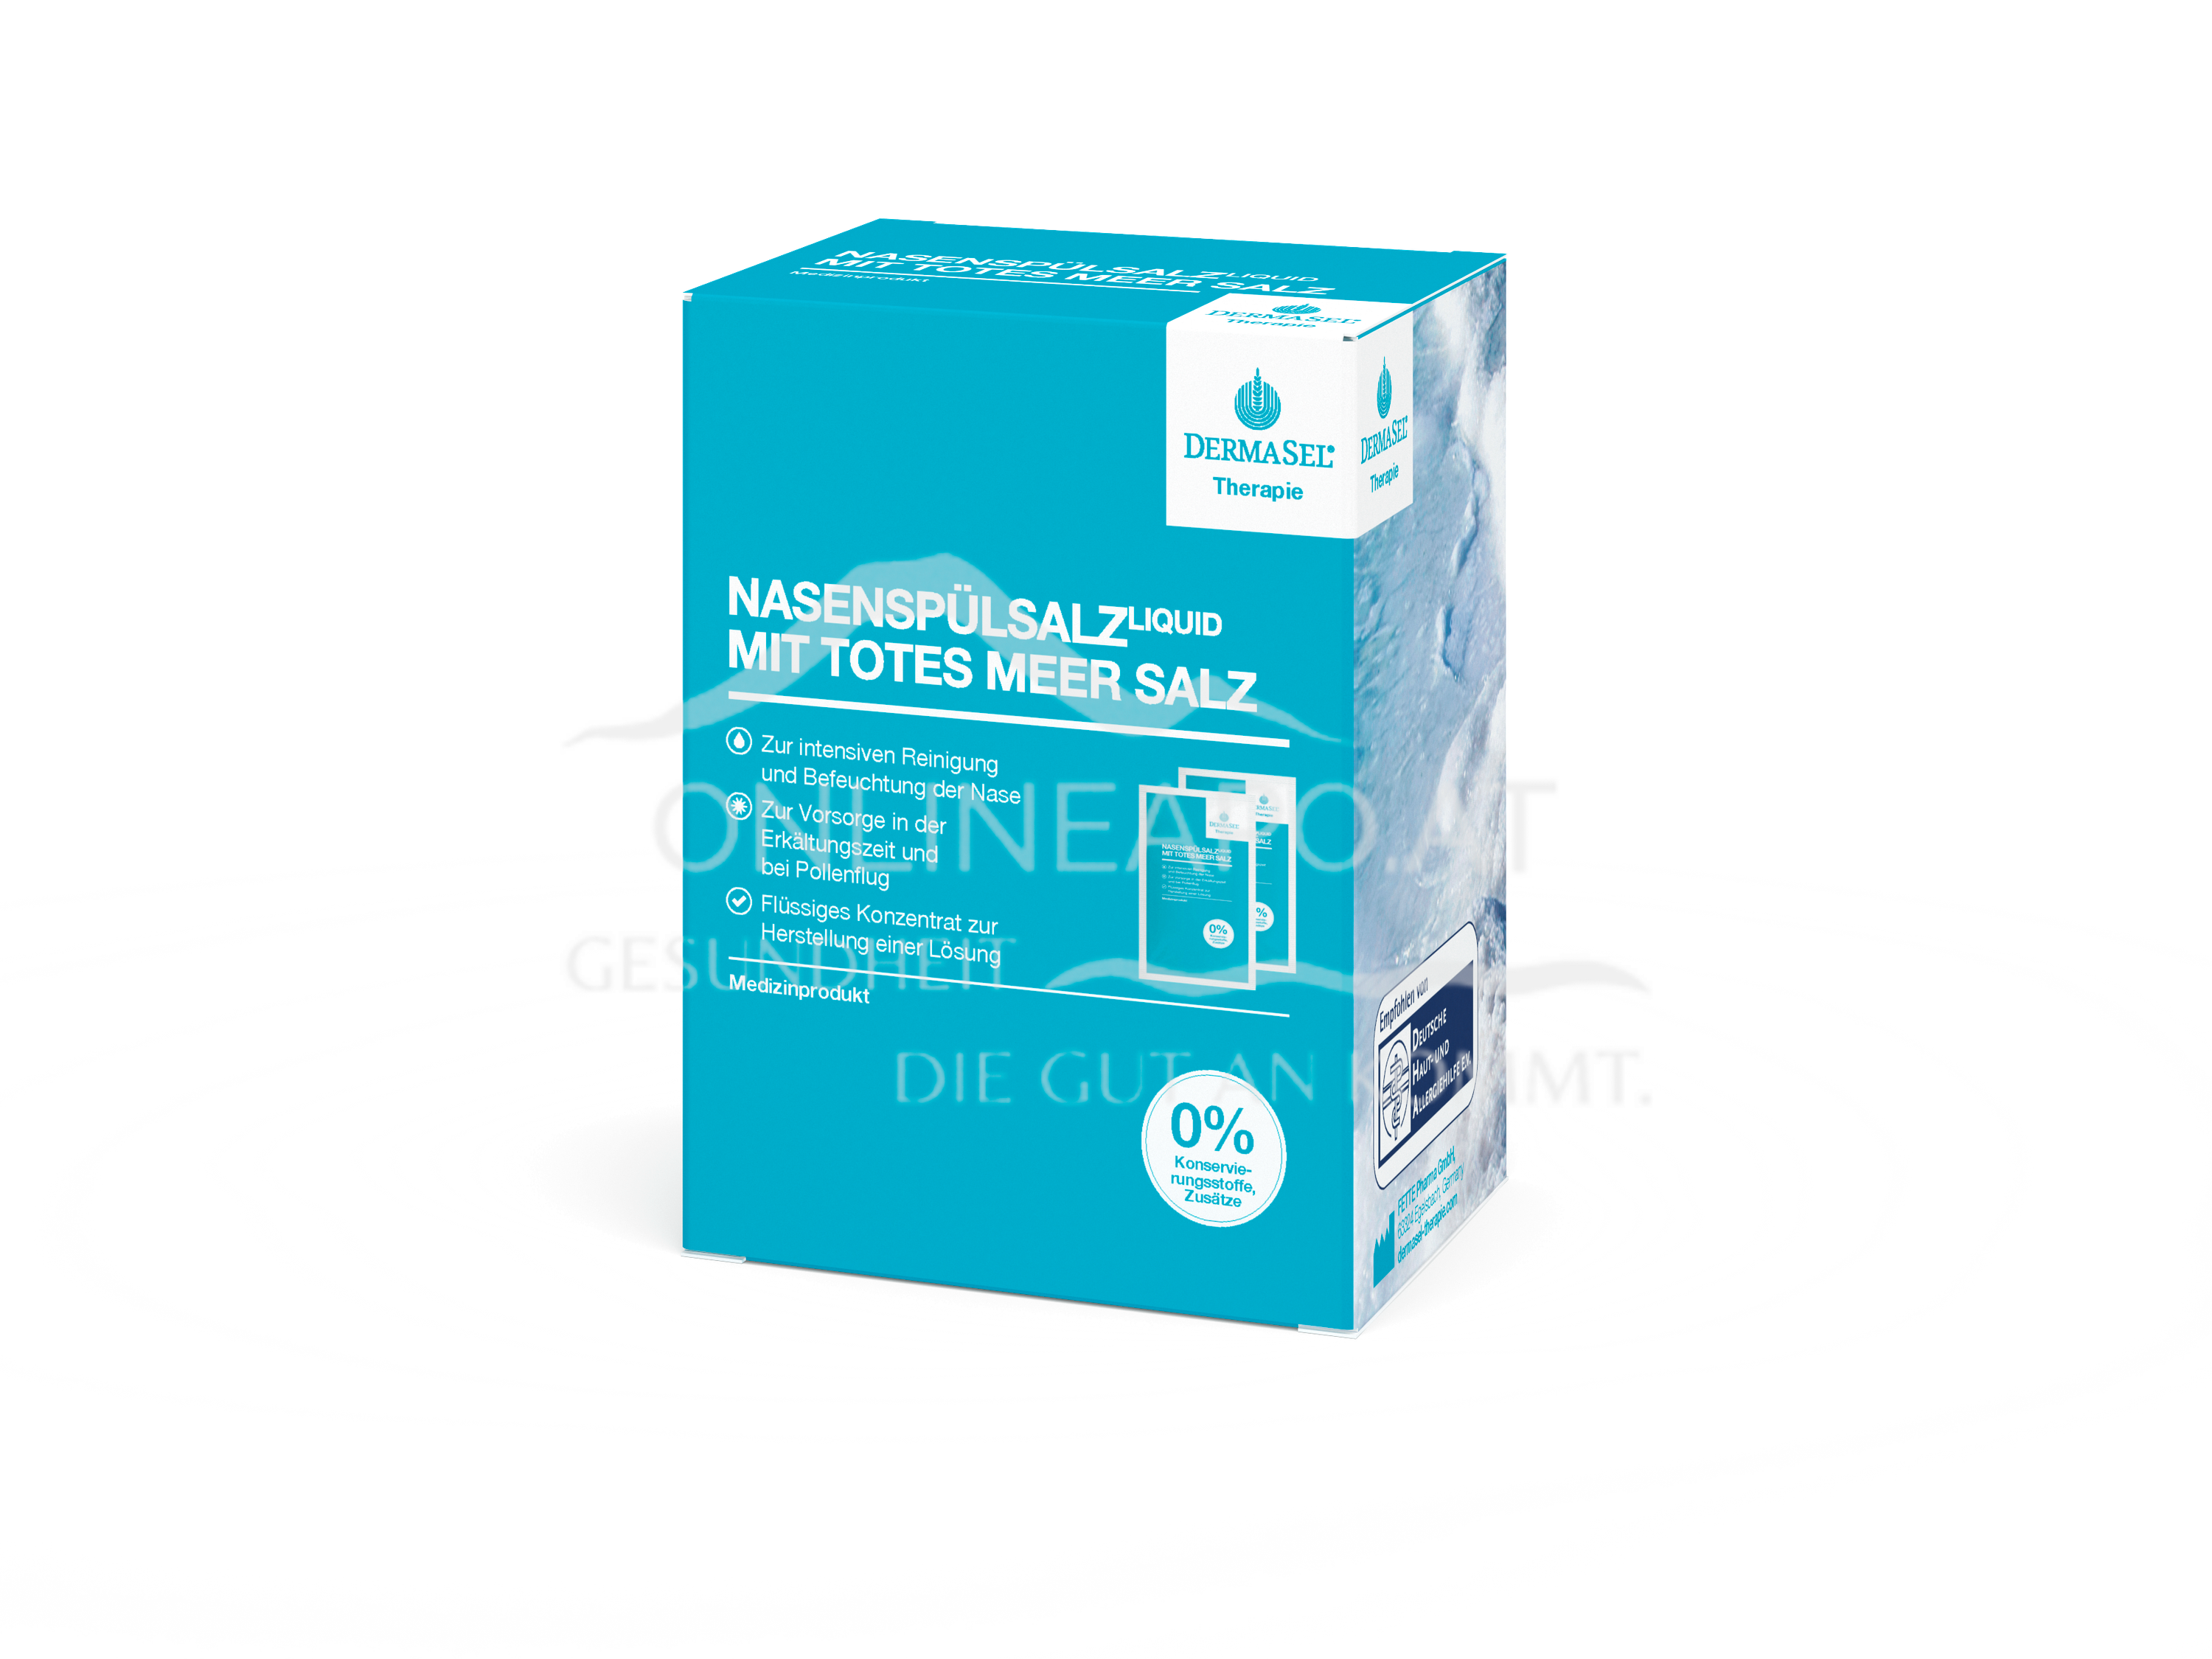 DermaSel® Therapie NasenspülsalzLIQUID